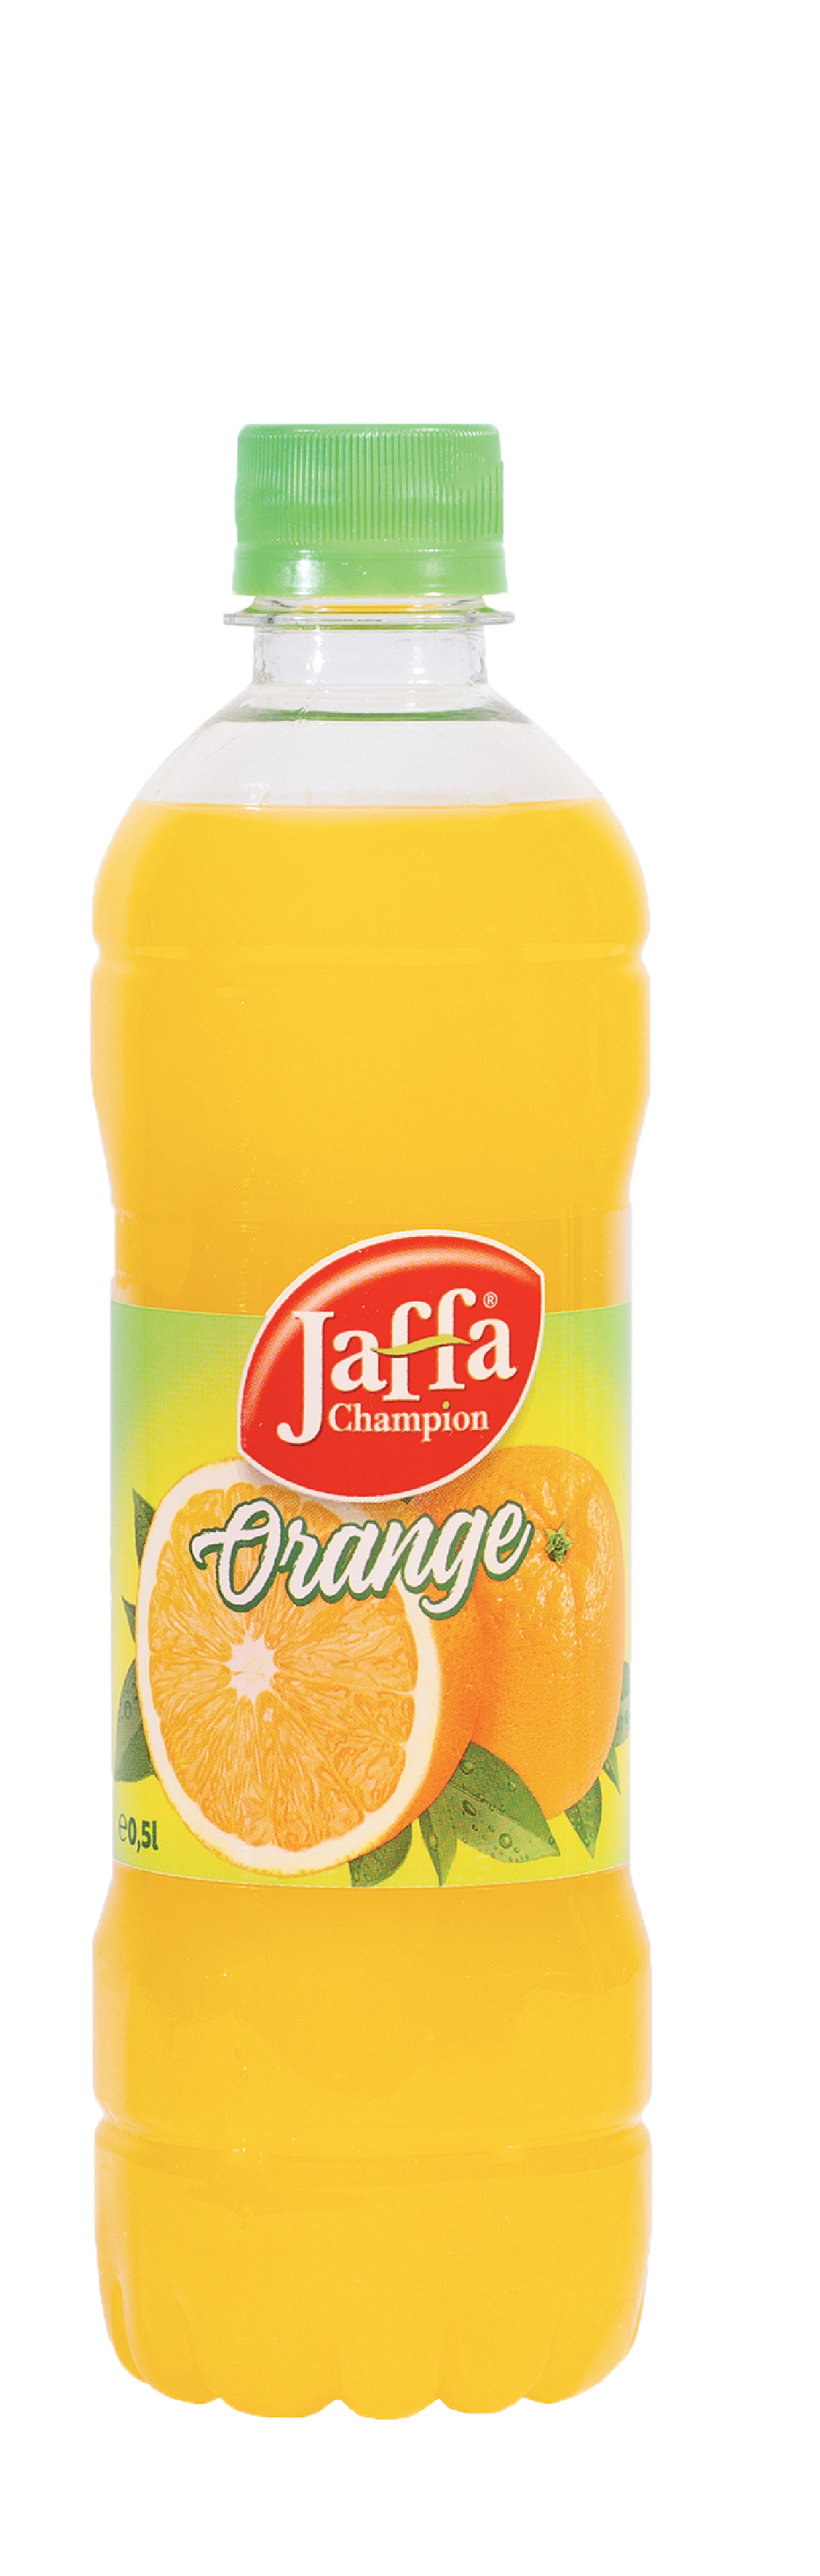 Jaffa Champion Orange 500 ml